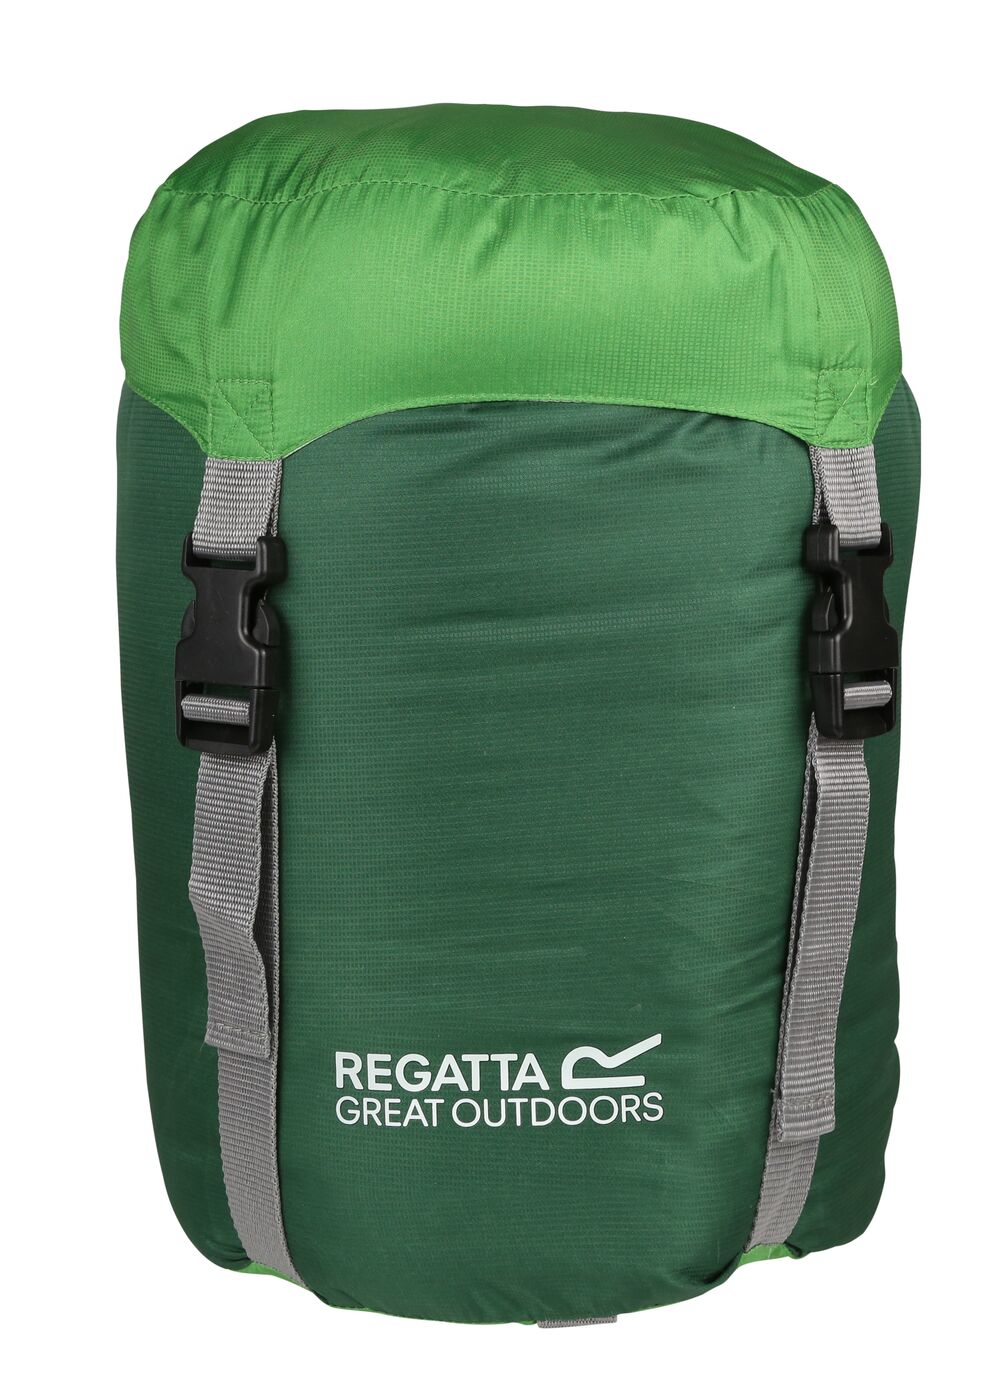 Rental premium camping sleeping bag Regatta Outdoor compression bag